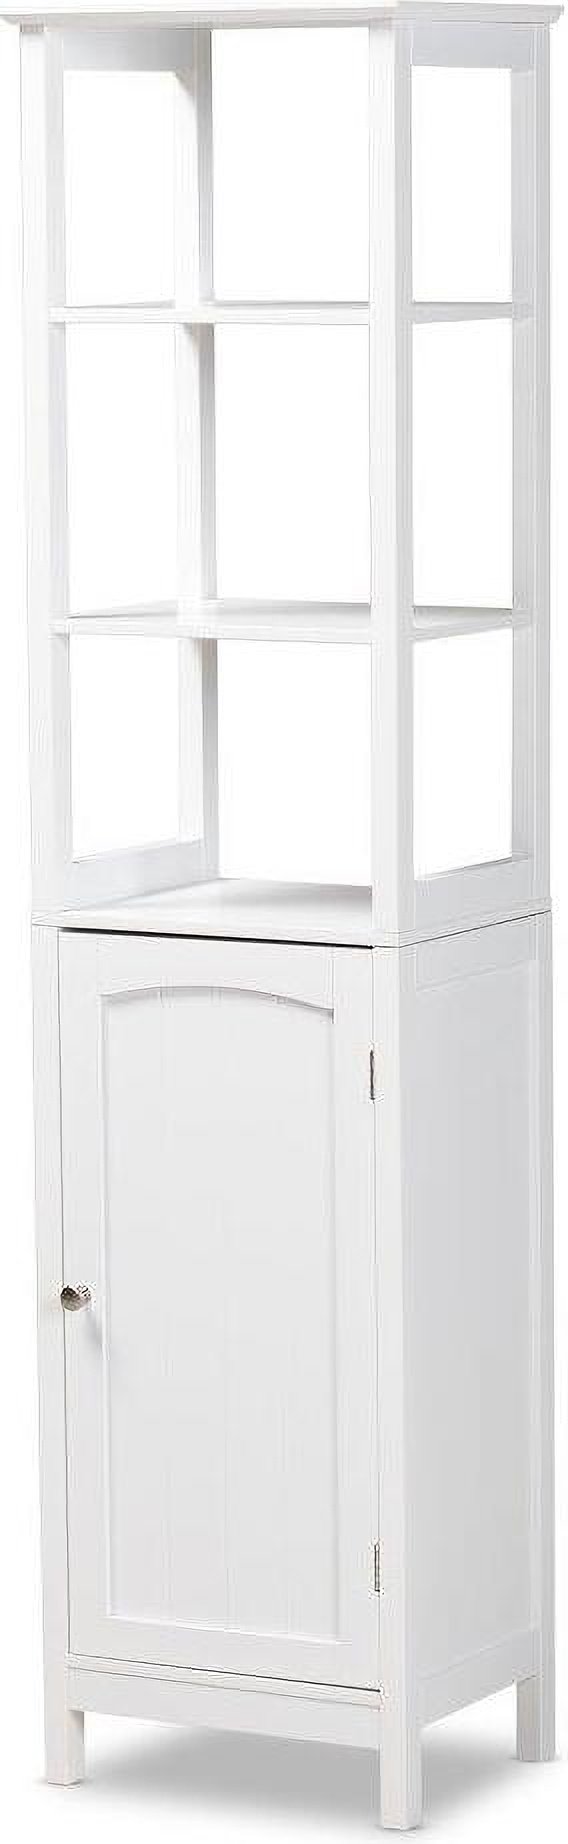 https://cdn.1stopbedrooms.com/media/catalog/product/b/a/baxton-studio-beltran-modern-and-contemporary-white-finished-wood-bathroom-storage-cabinet_qb13321156.jpg